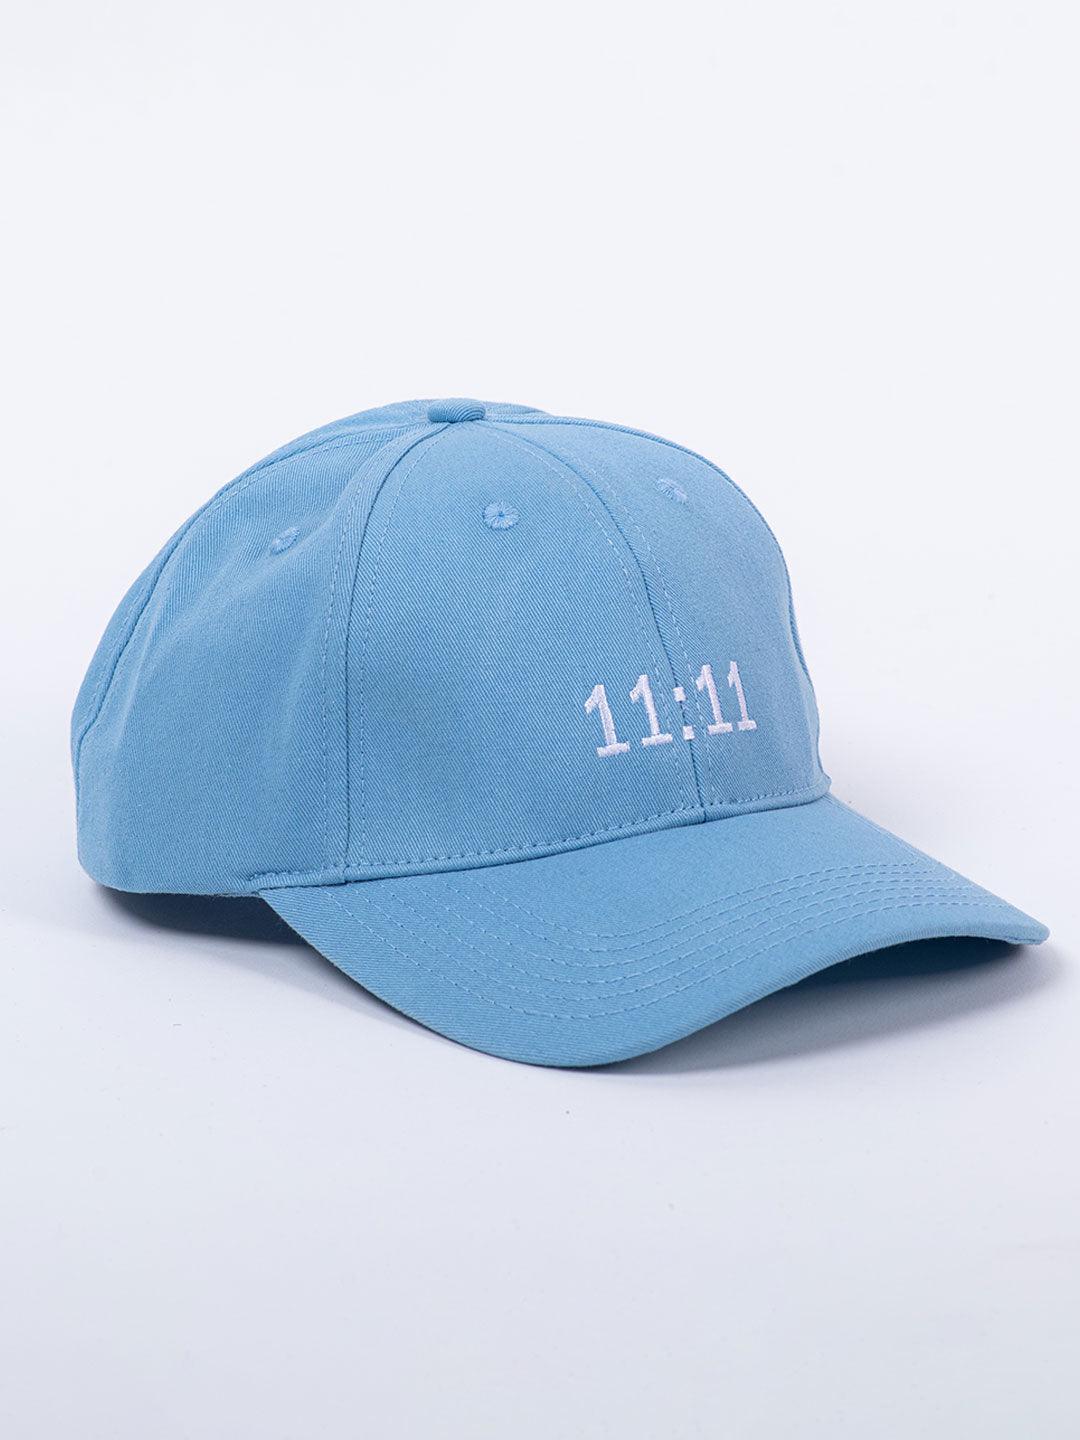 11:11 Embroidered Pale Blue Free Size Unisex Baseball Caps - Tistabene